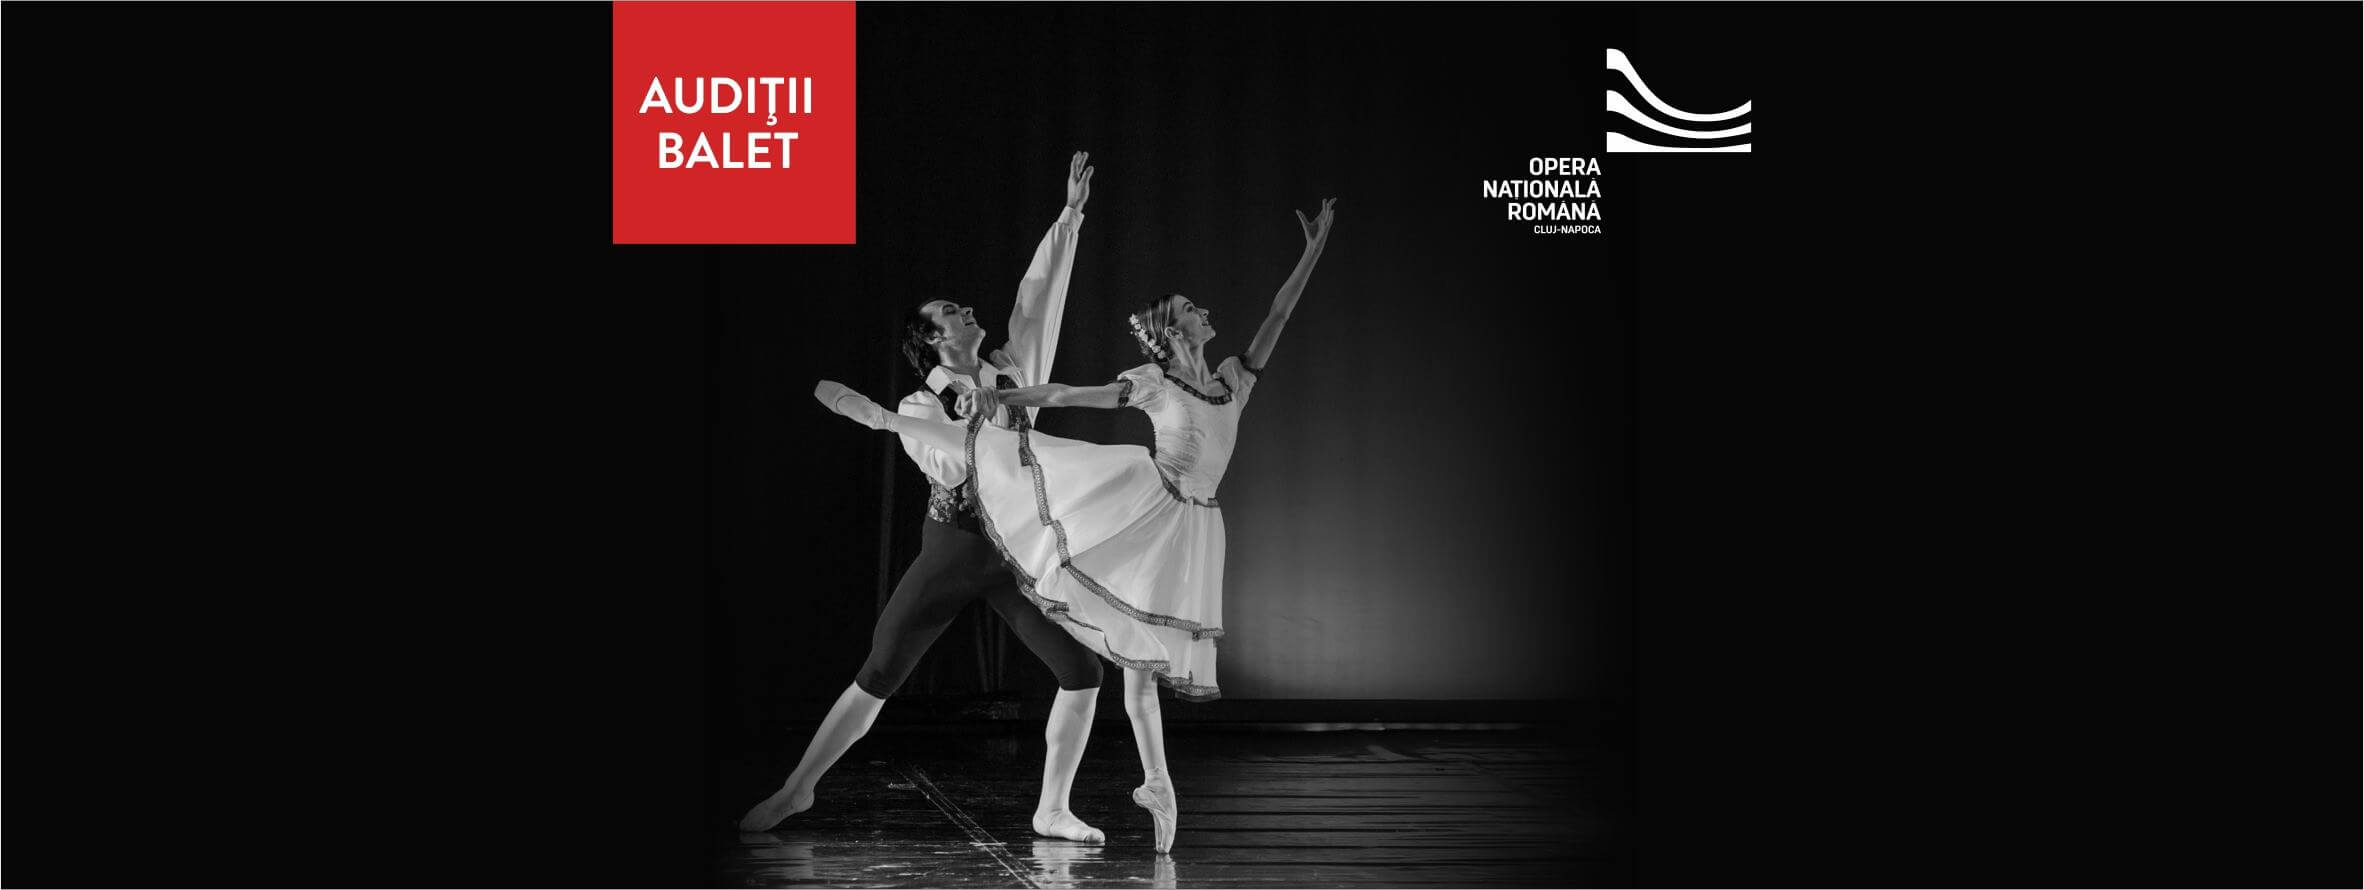 Ballet Auditions Saturday June 8 2019 Opera Națională Romană